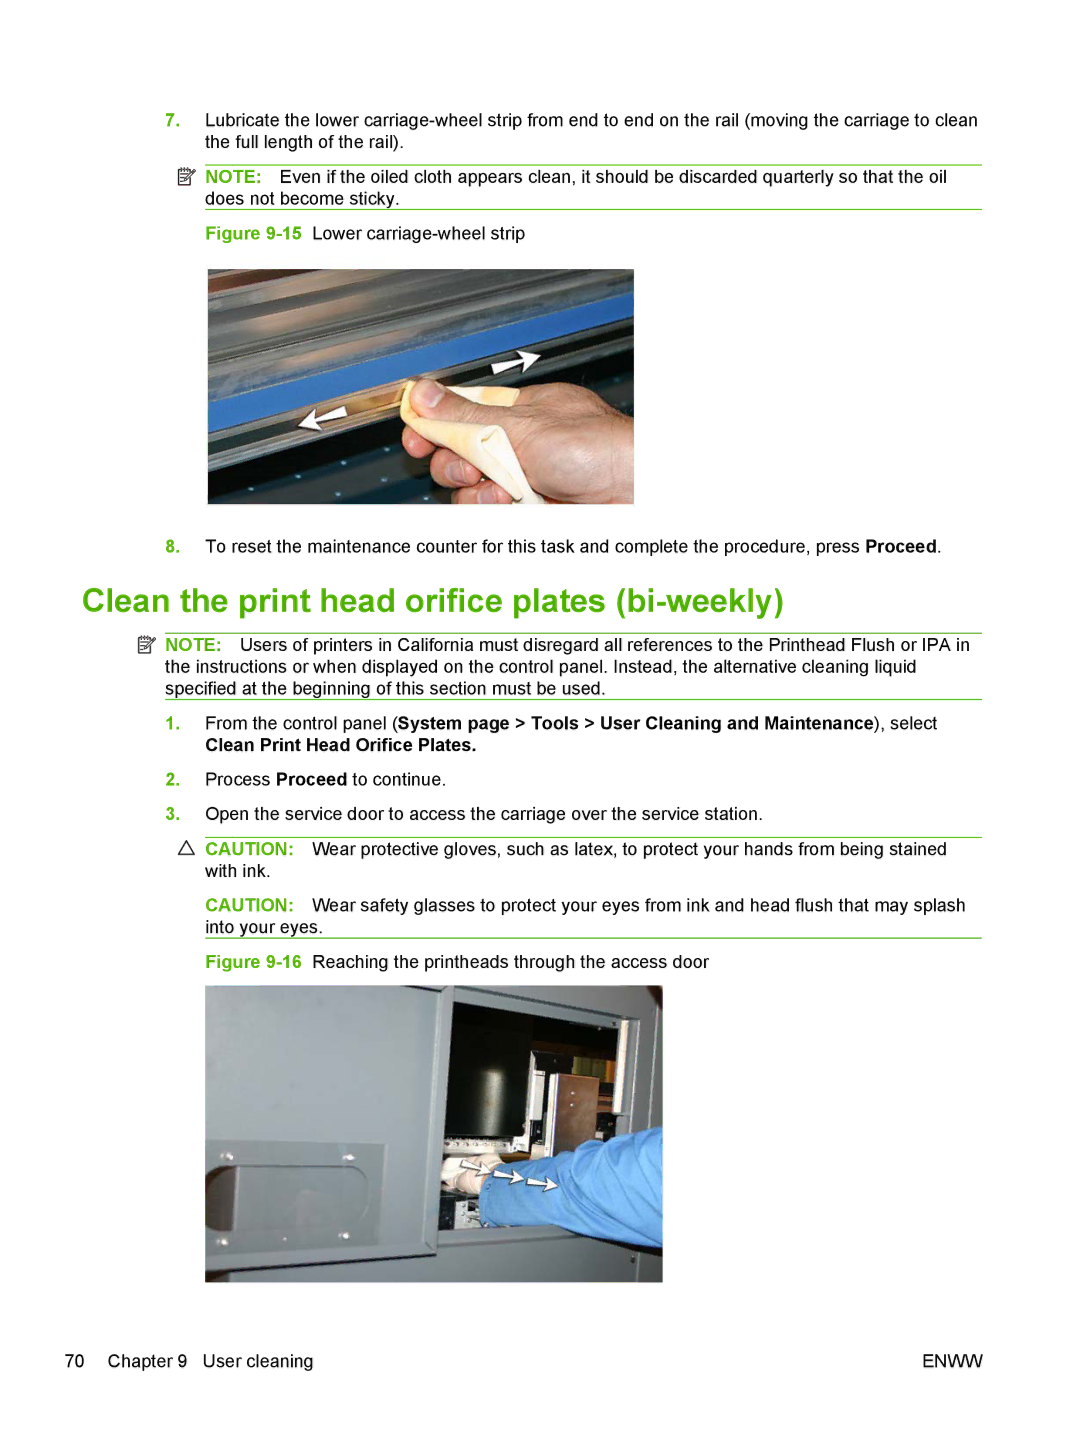 HP Scitex FB700 Industrial manual Clean the print head orifice plates bi-weekly 